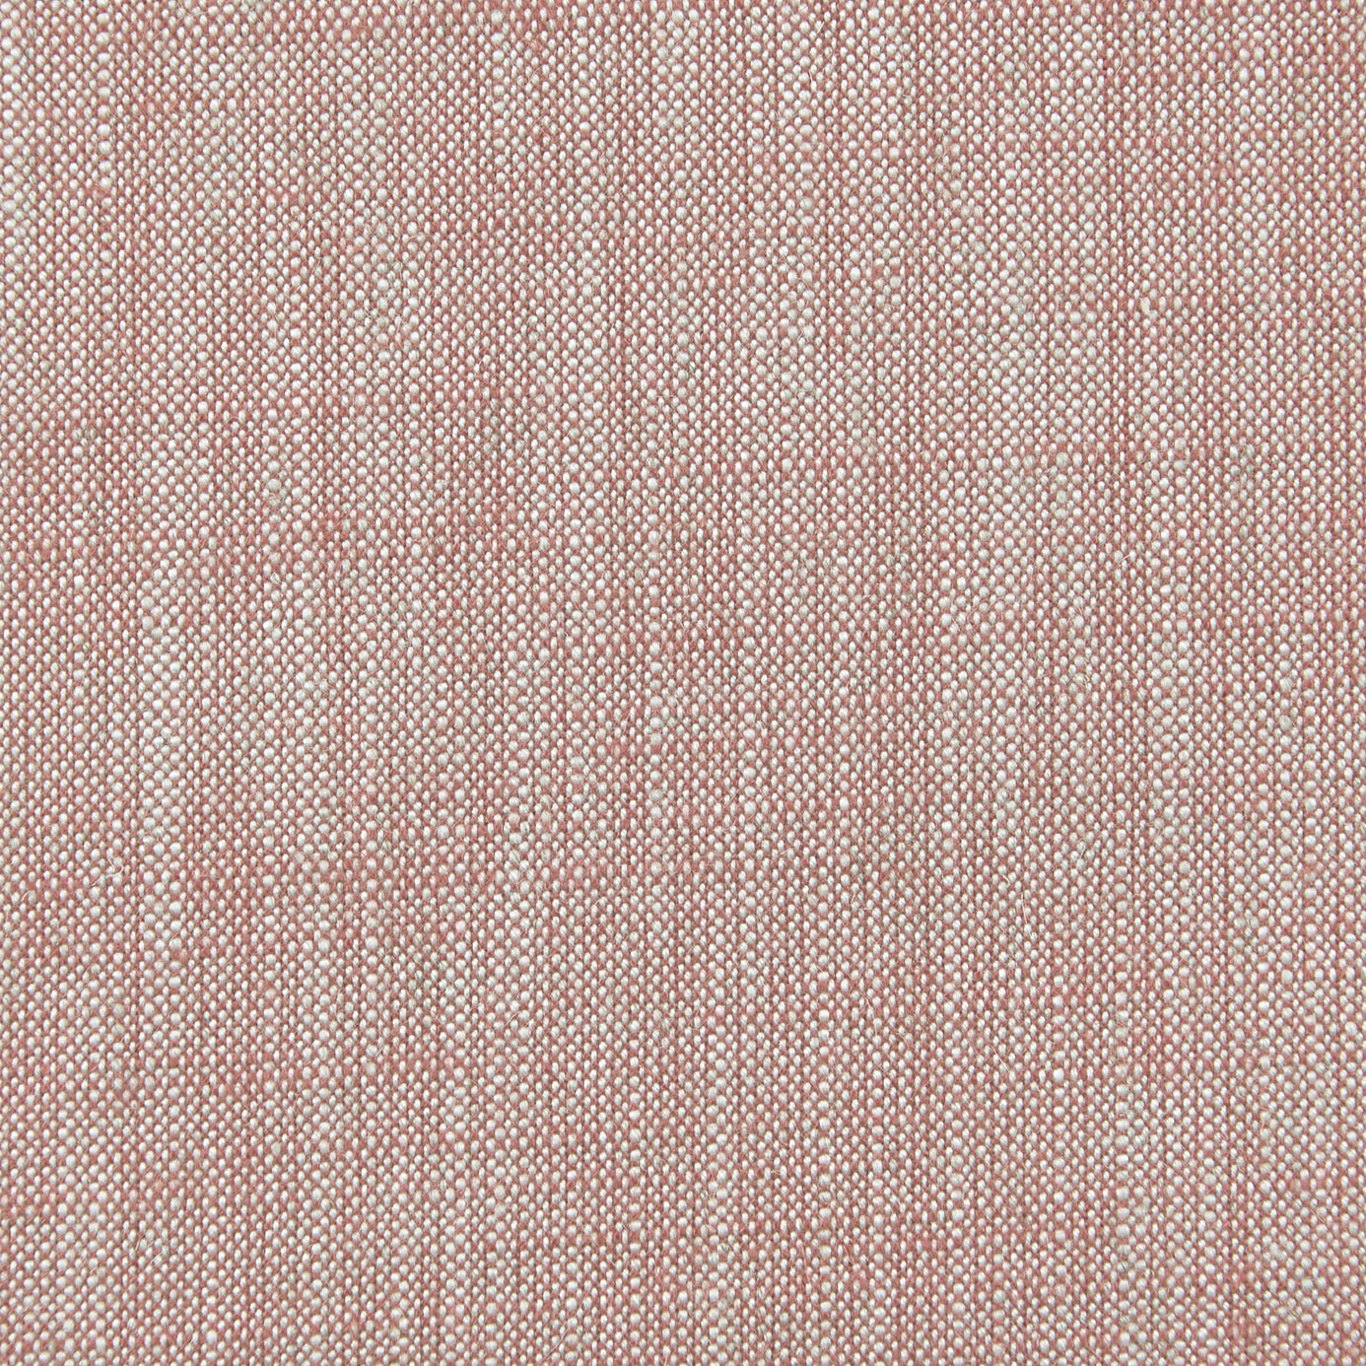 Biarritz Blush Fabric by CNC